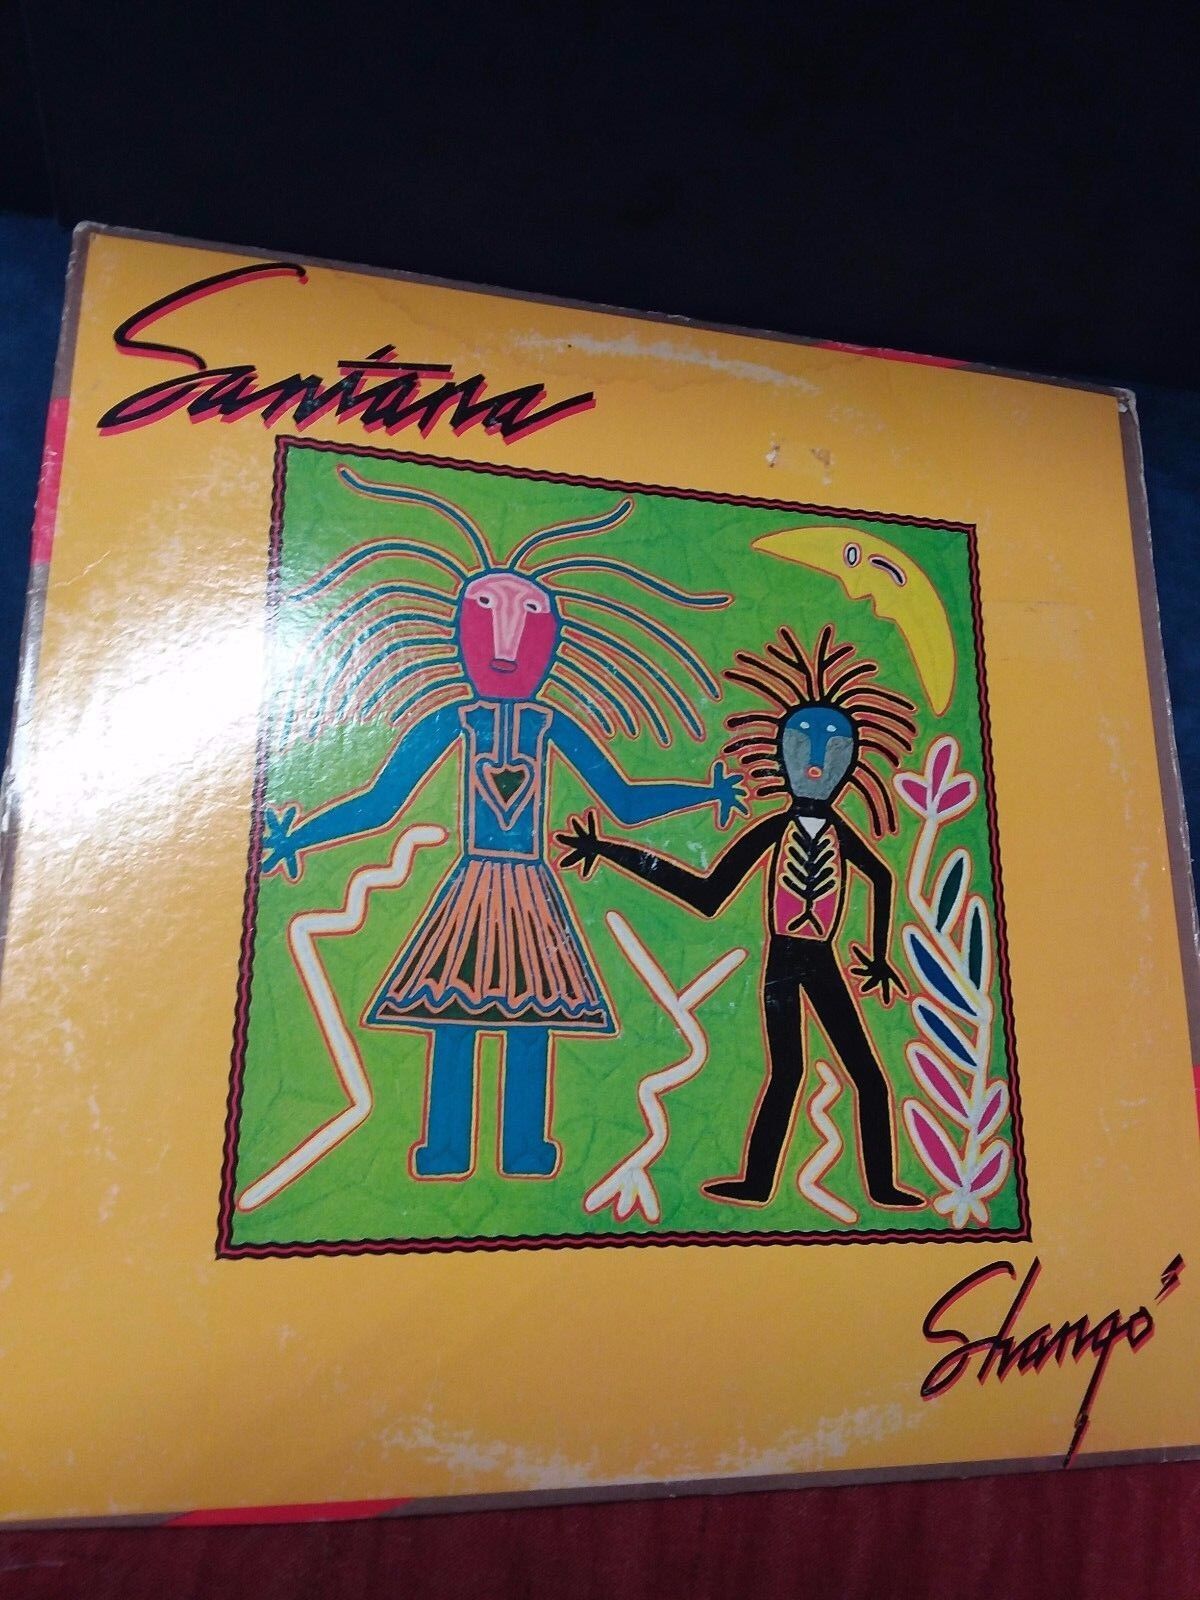 SANTANA Shango Vinyl LP 33 Rock Record Album  USED